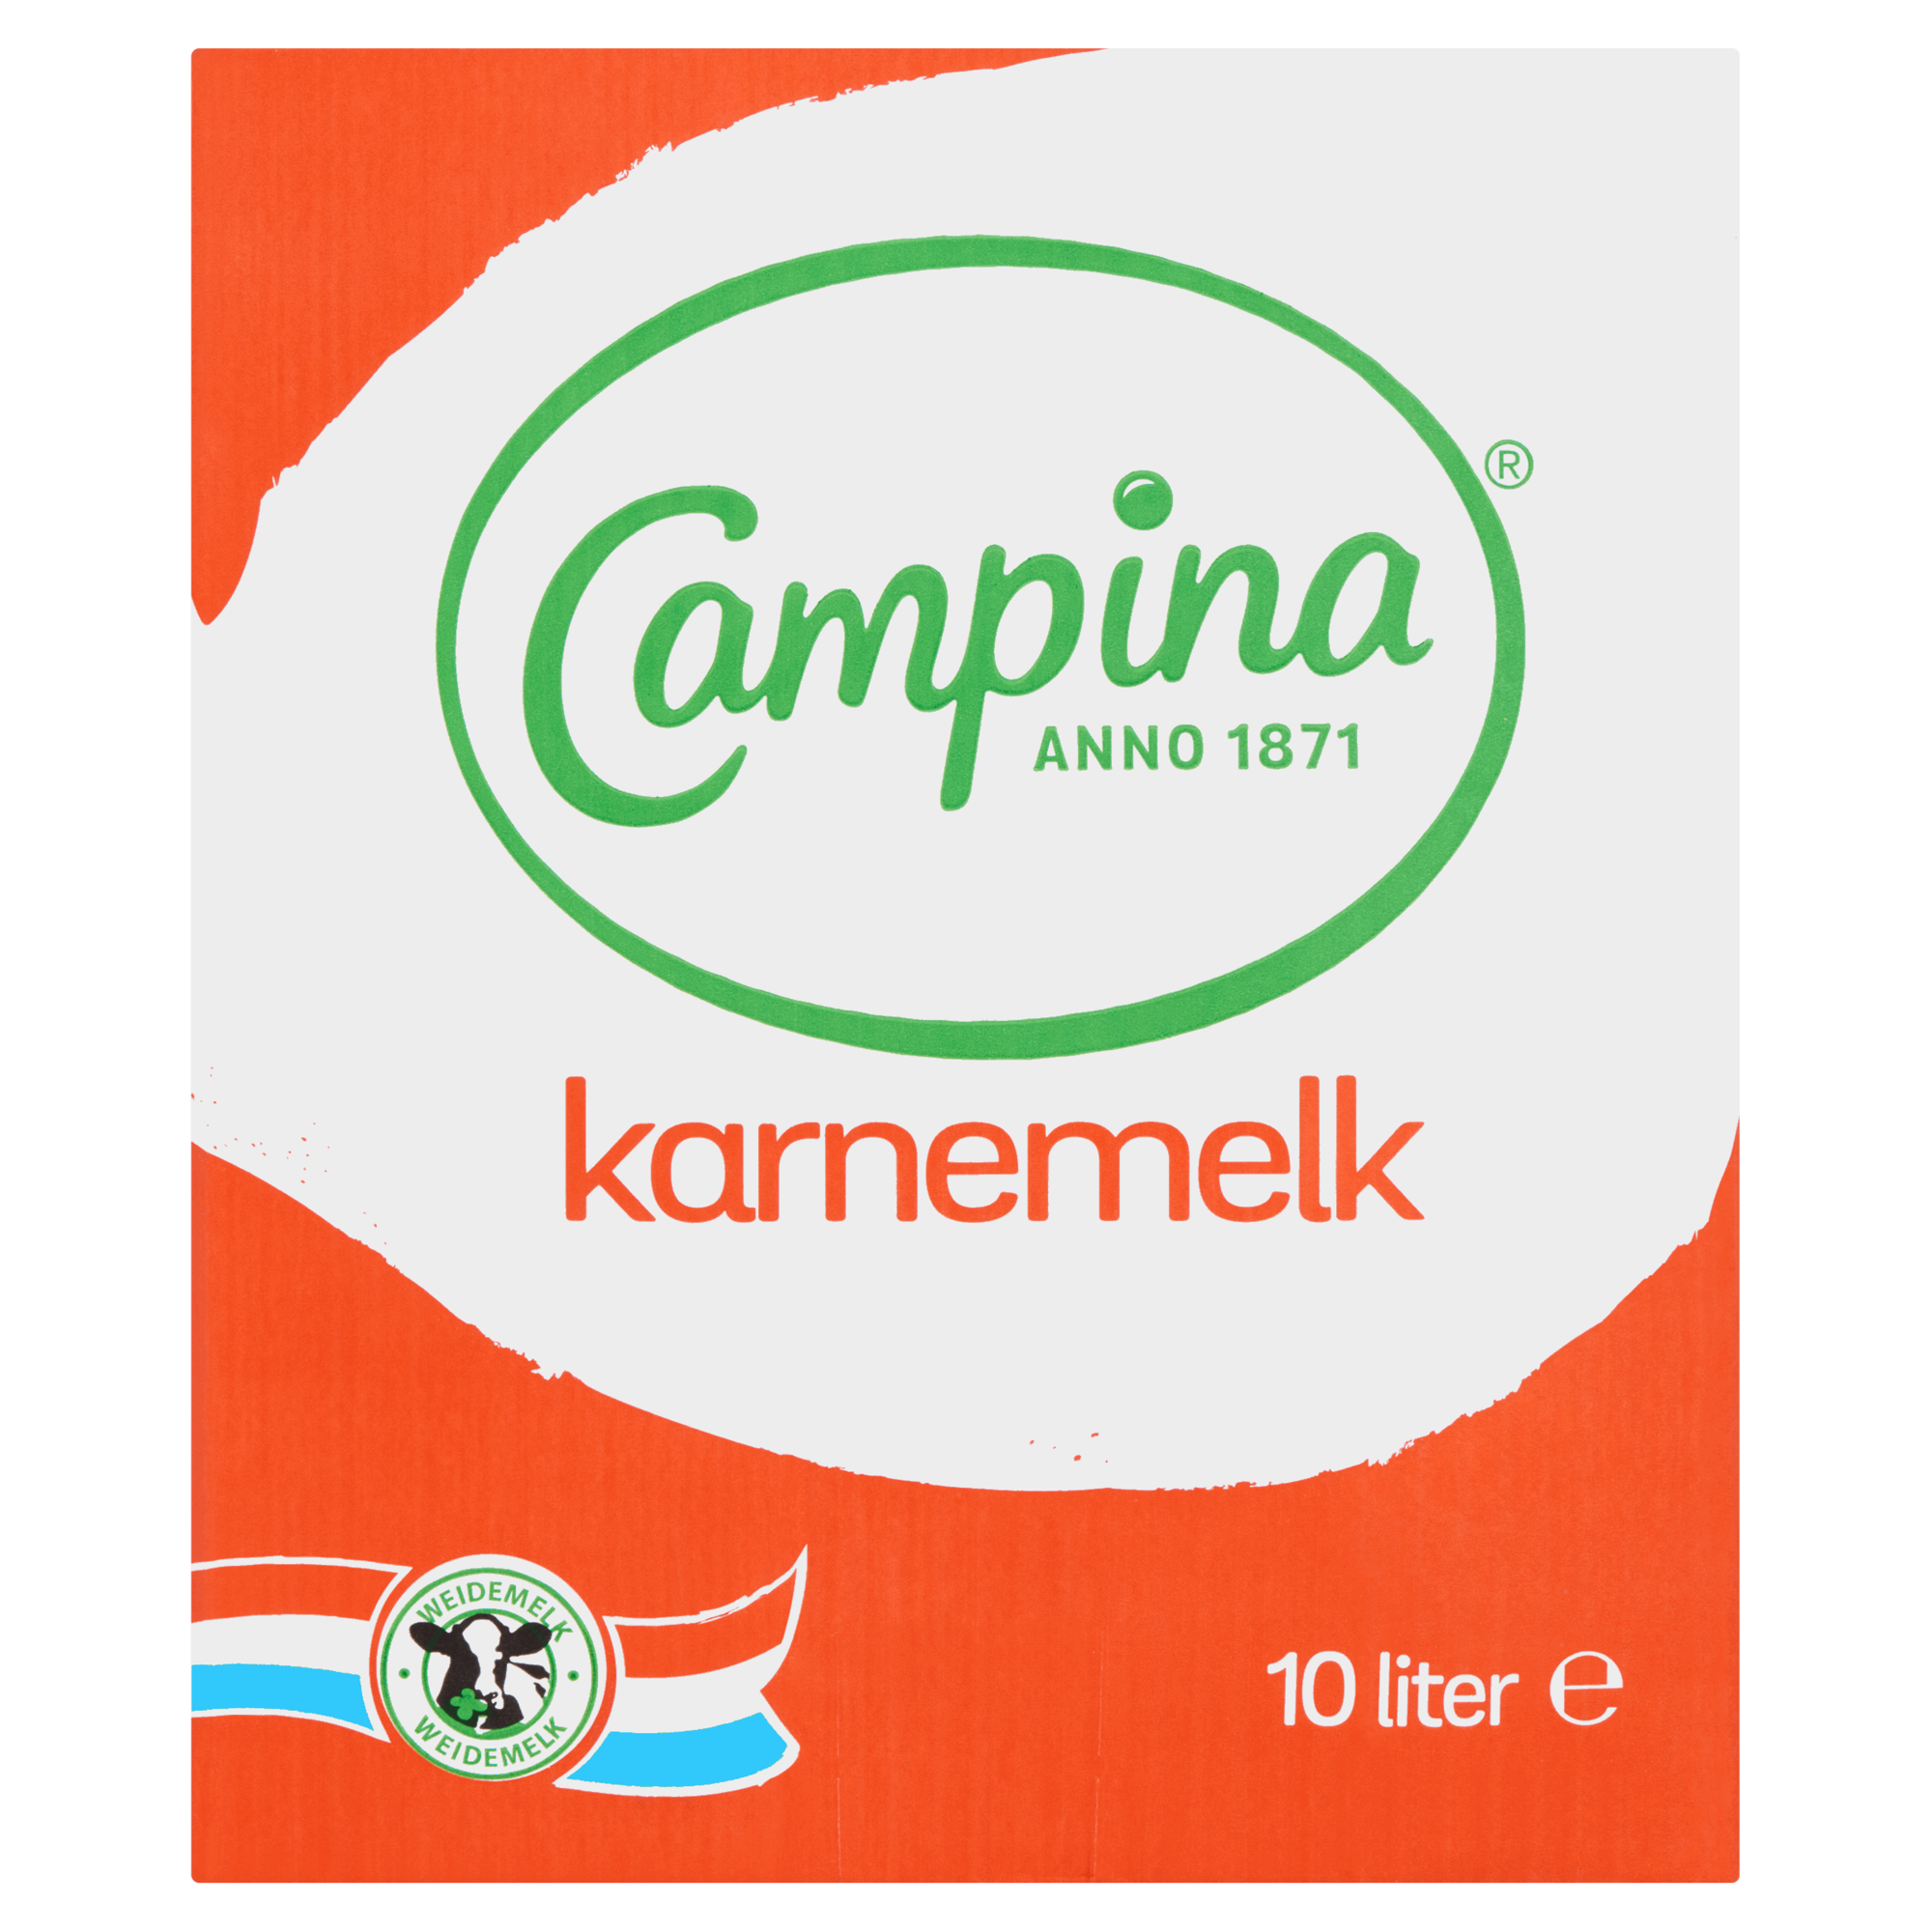 7907 Karnemelk poly bag in box 10 liter